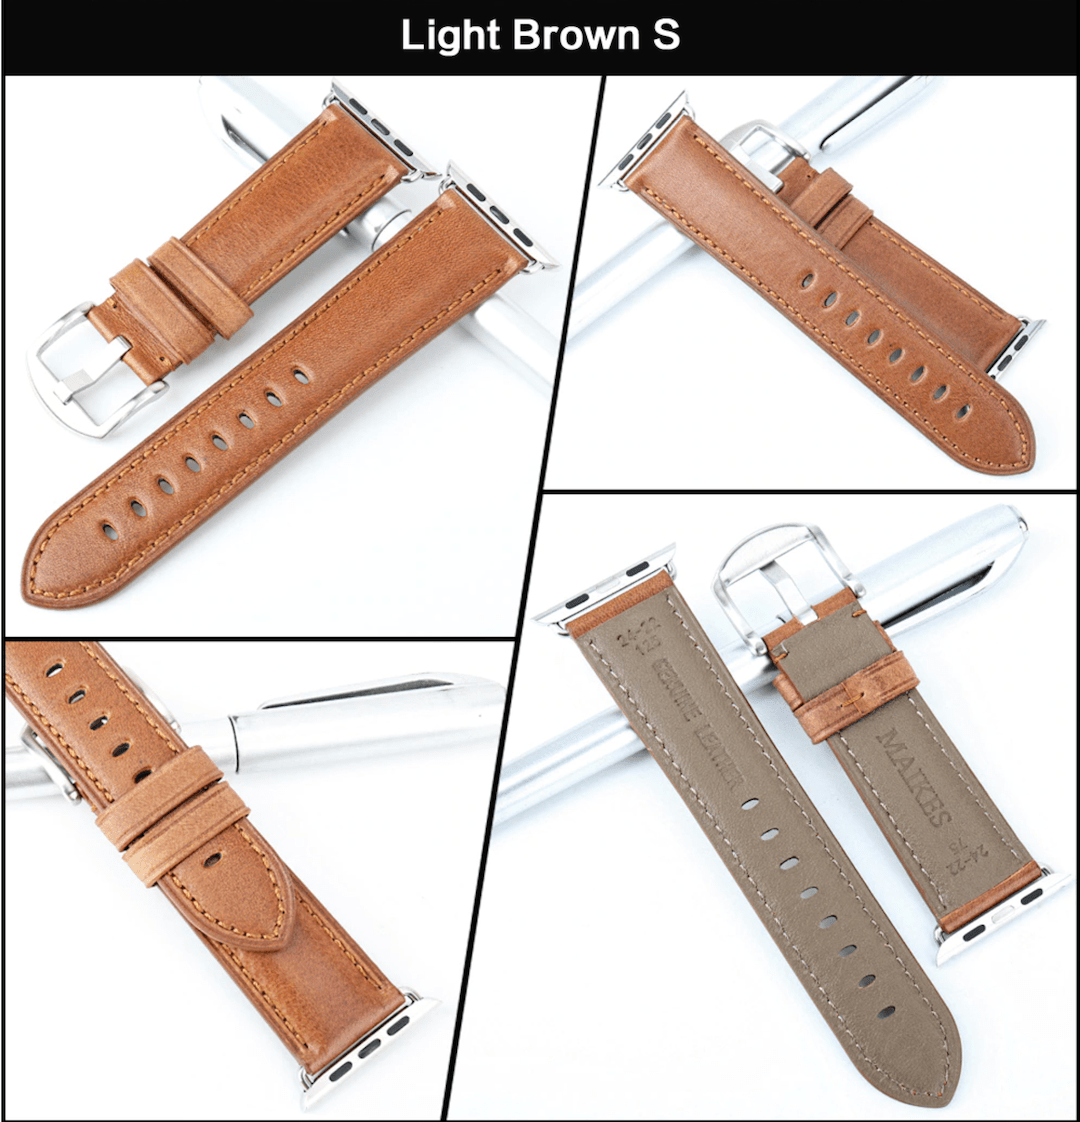 Genuine light brown original leather apple watch premium high quality straps in india